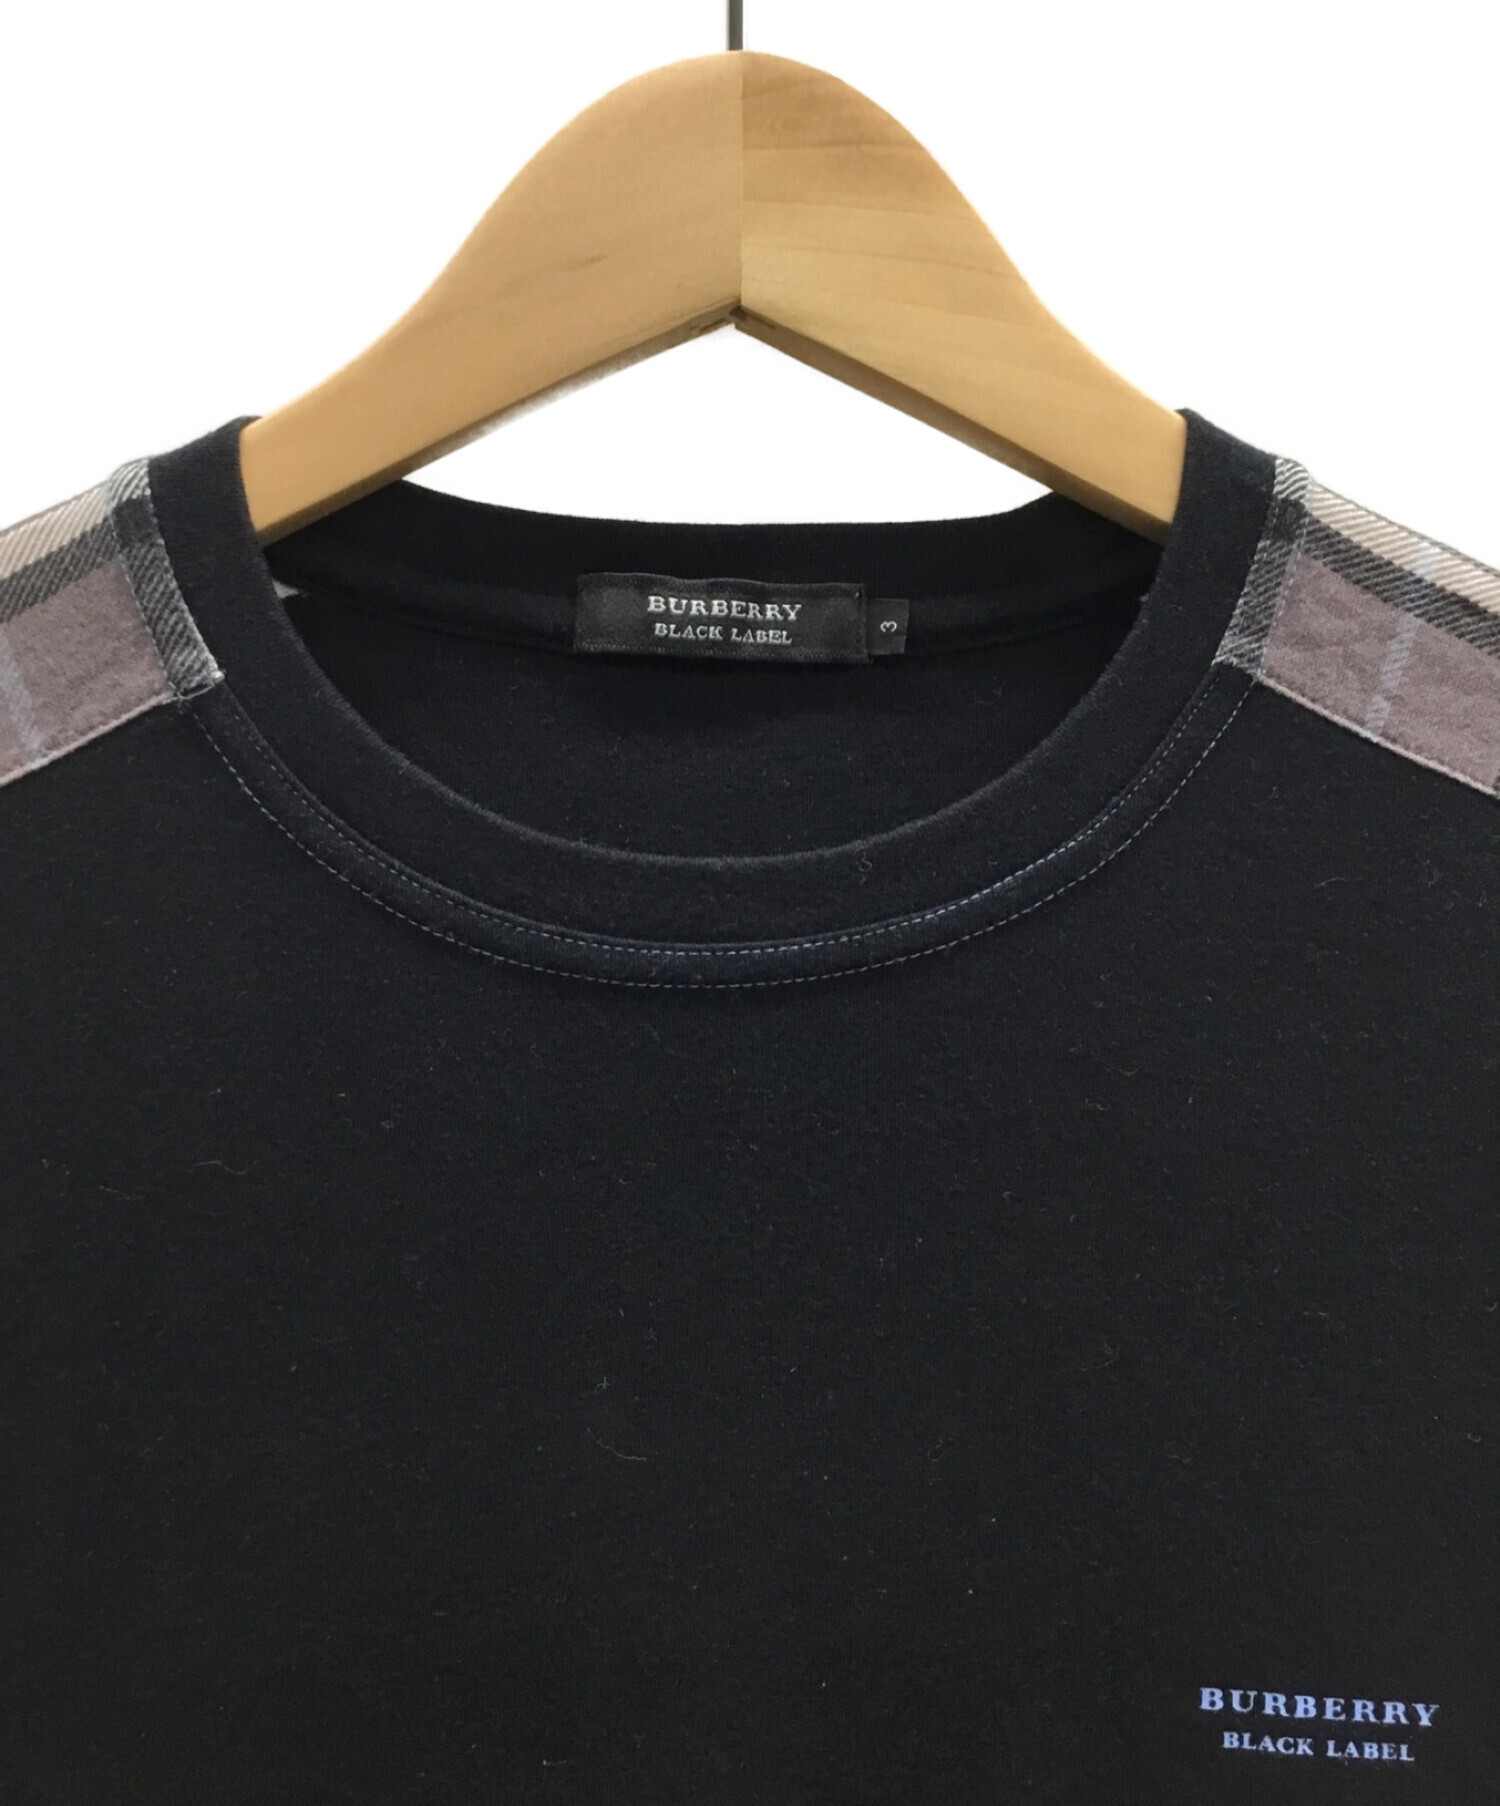 BURBERRY BLACK LABEL (バーバリーブラックレーベル) 長袖Tシャツ ブラック サイズ:3